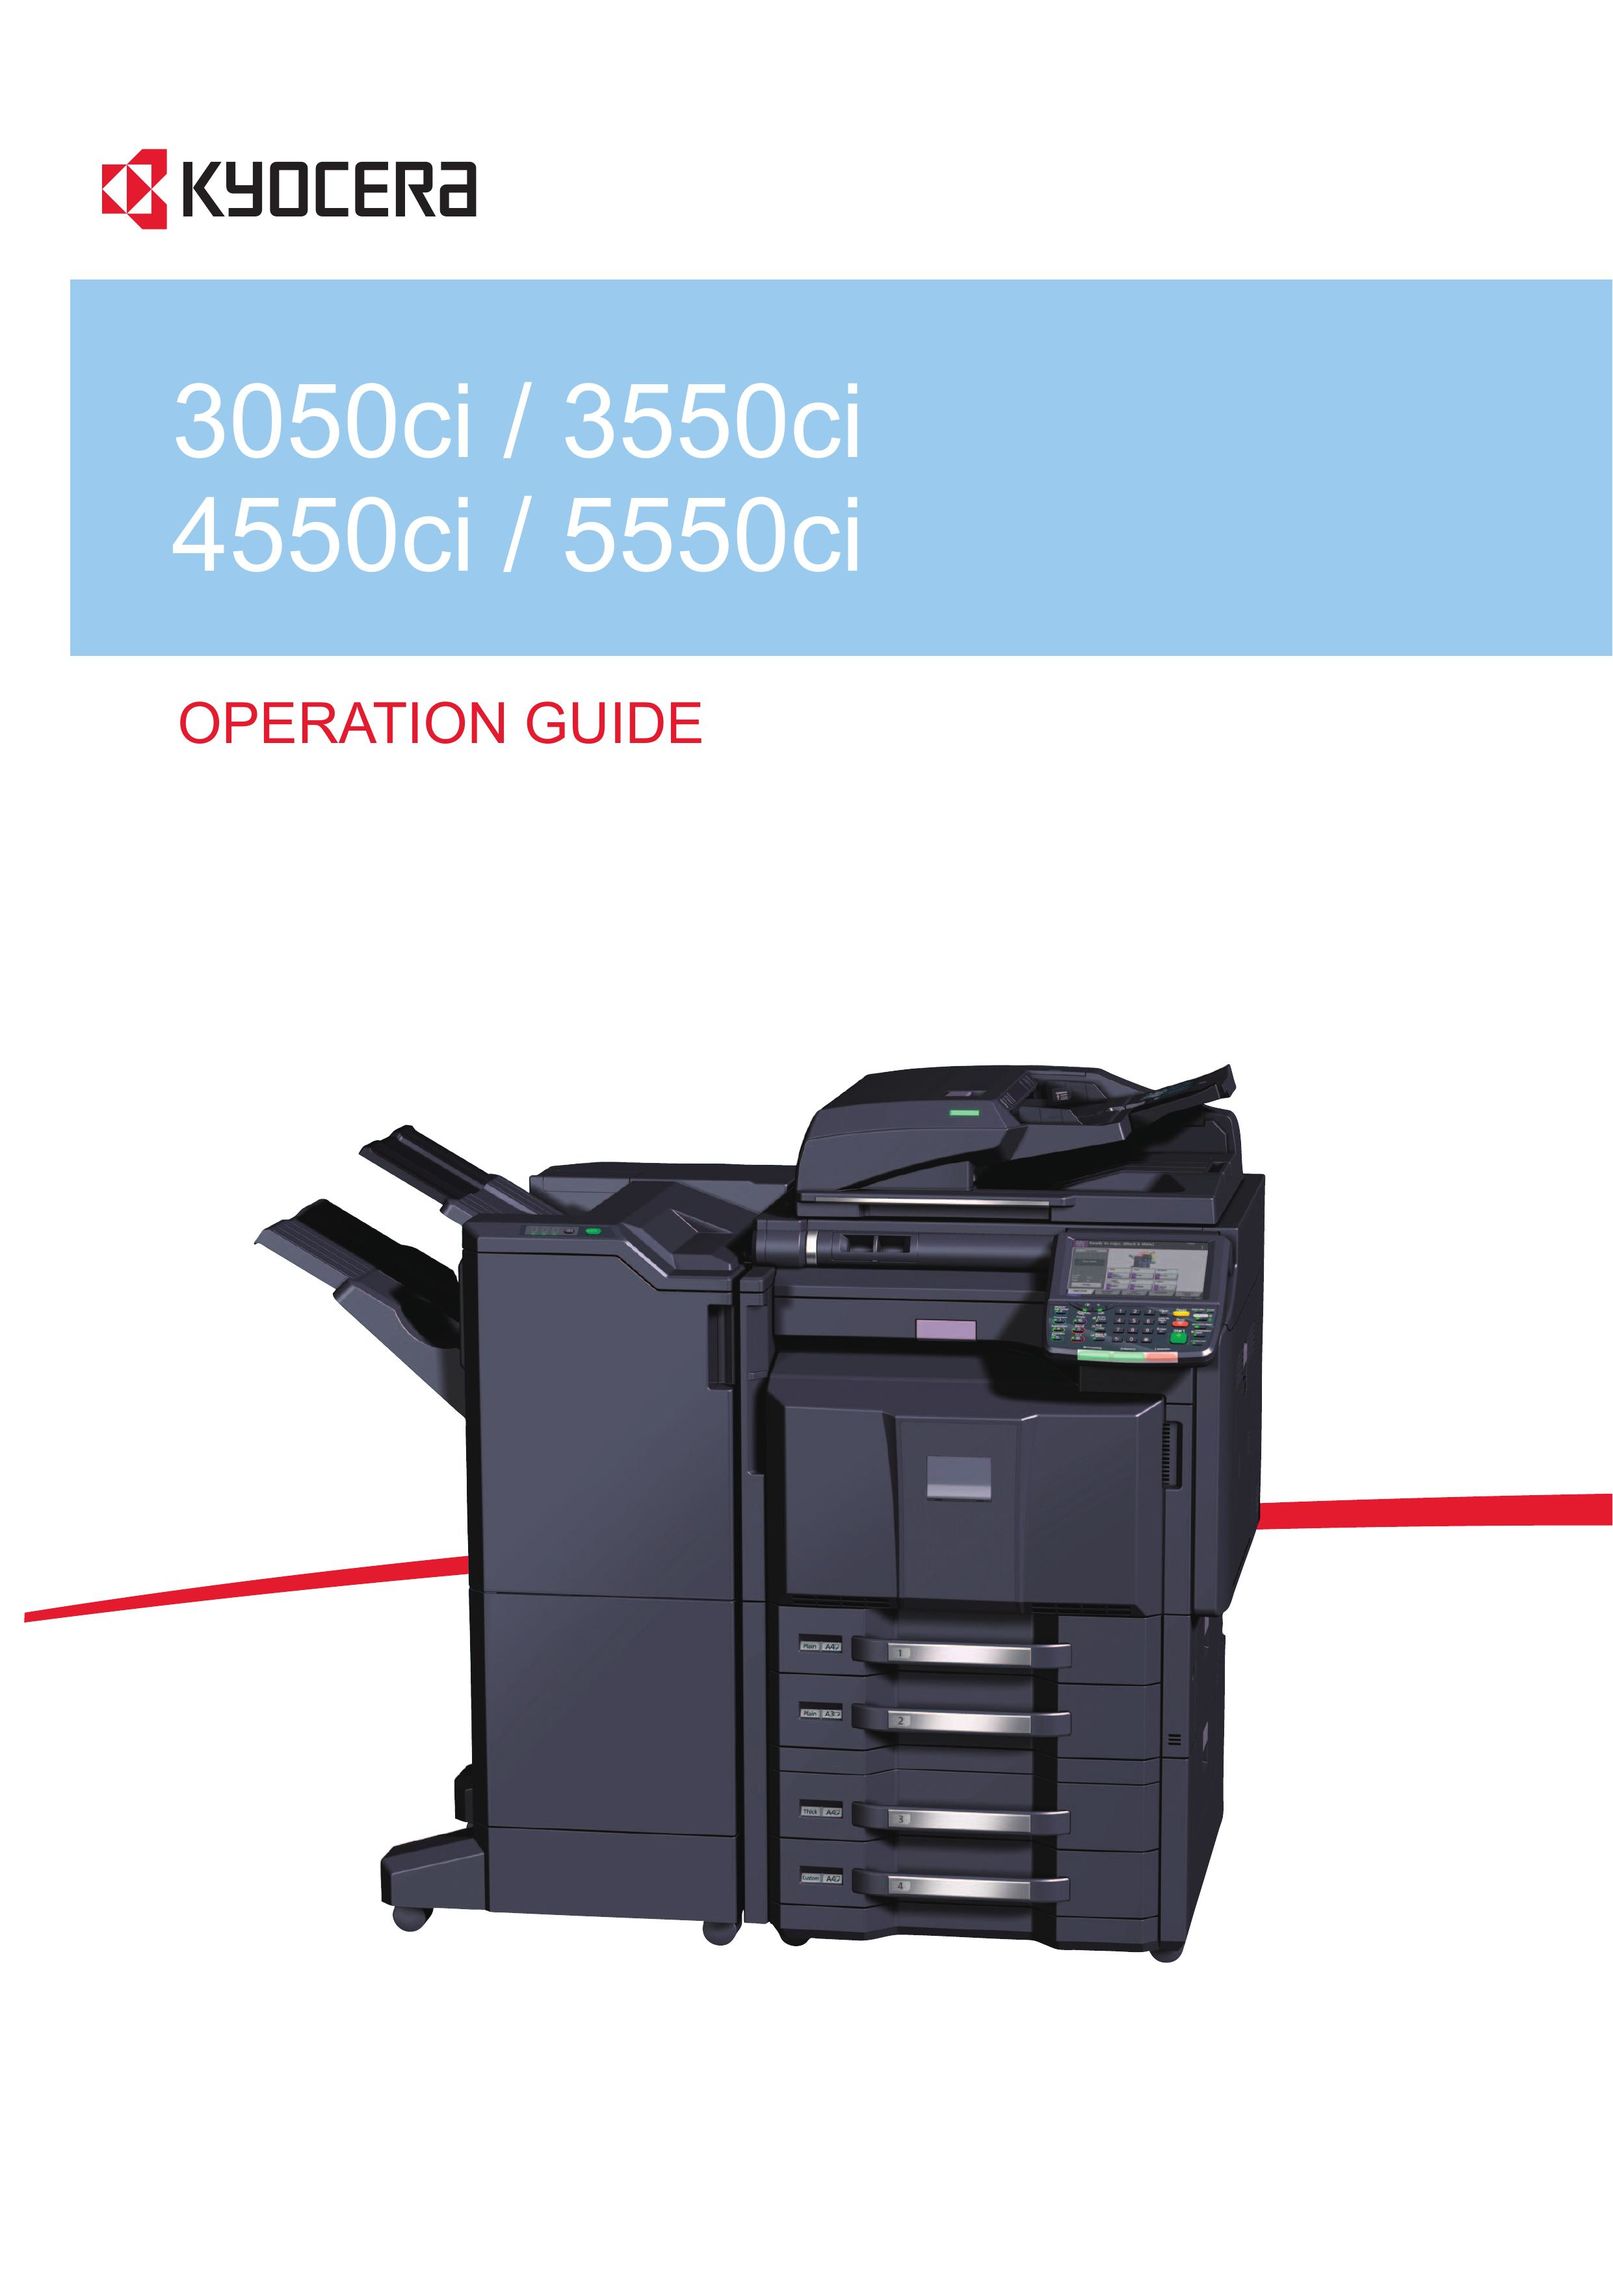 Kyocera 4550ci All in One Printer User Manual